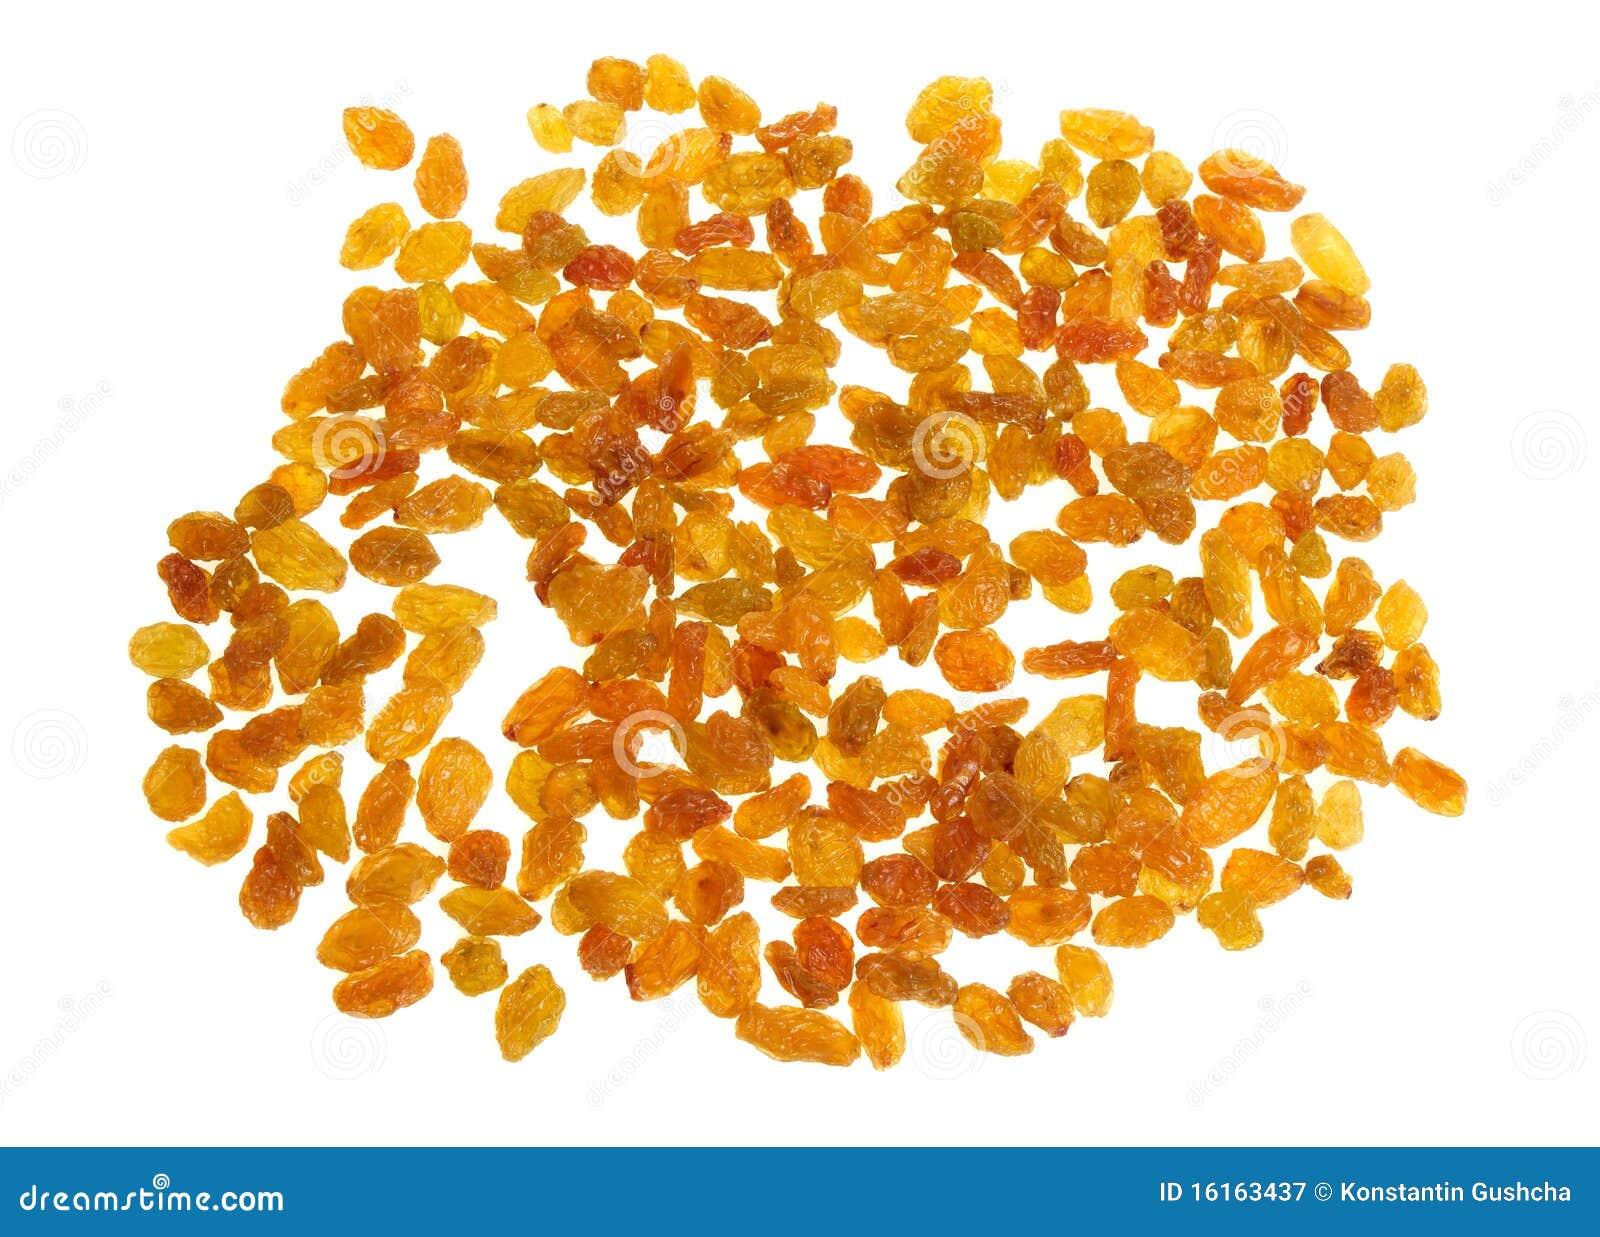 Golden raisins stock image. Image of sweet, heap, grape - 16163437